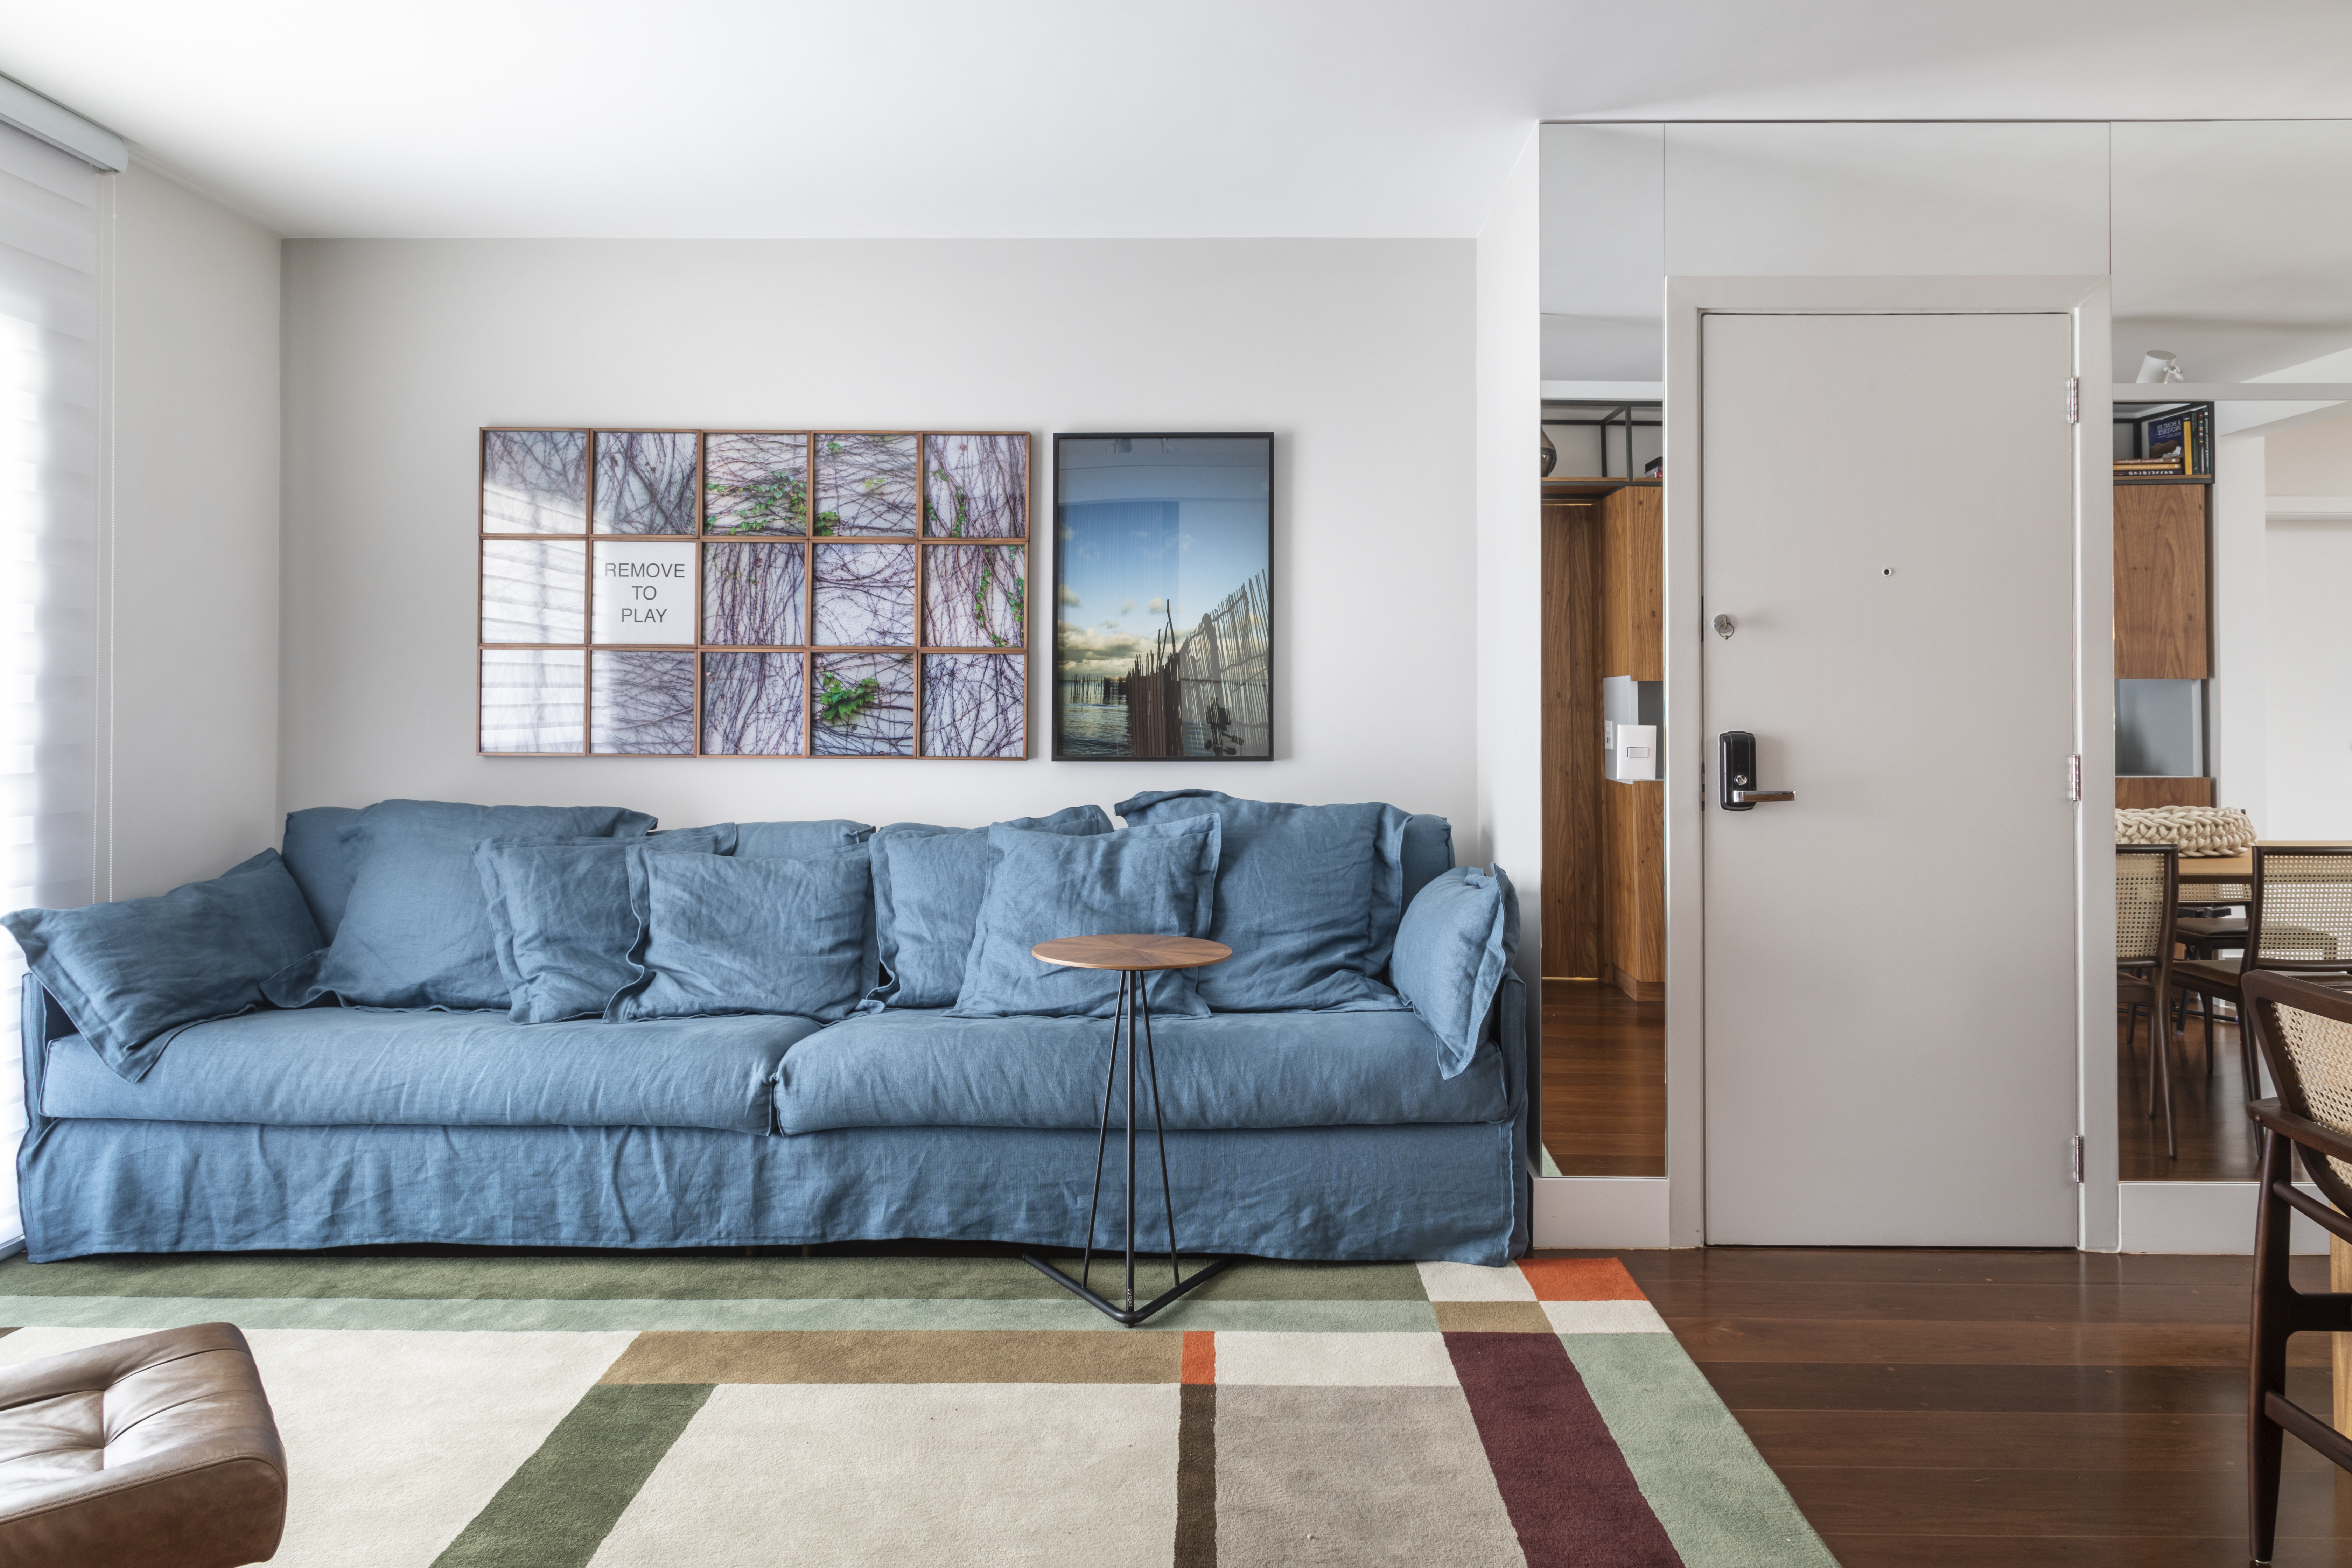 Sala com sofá azul